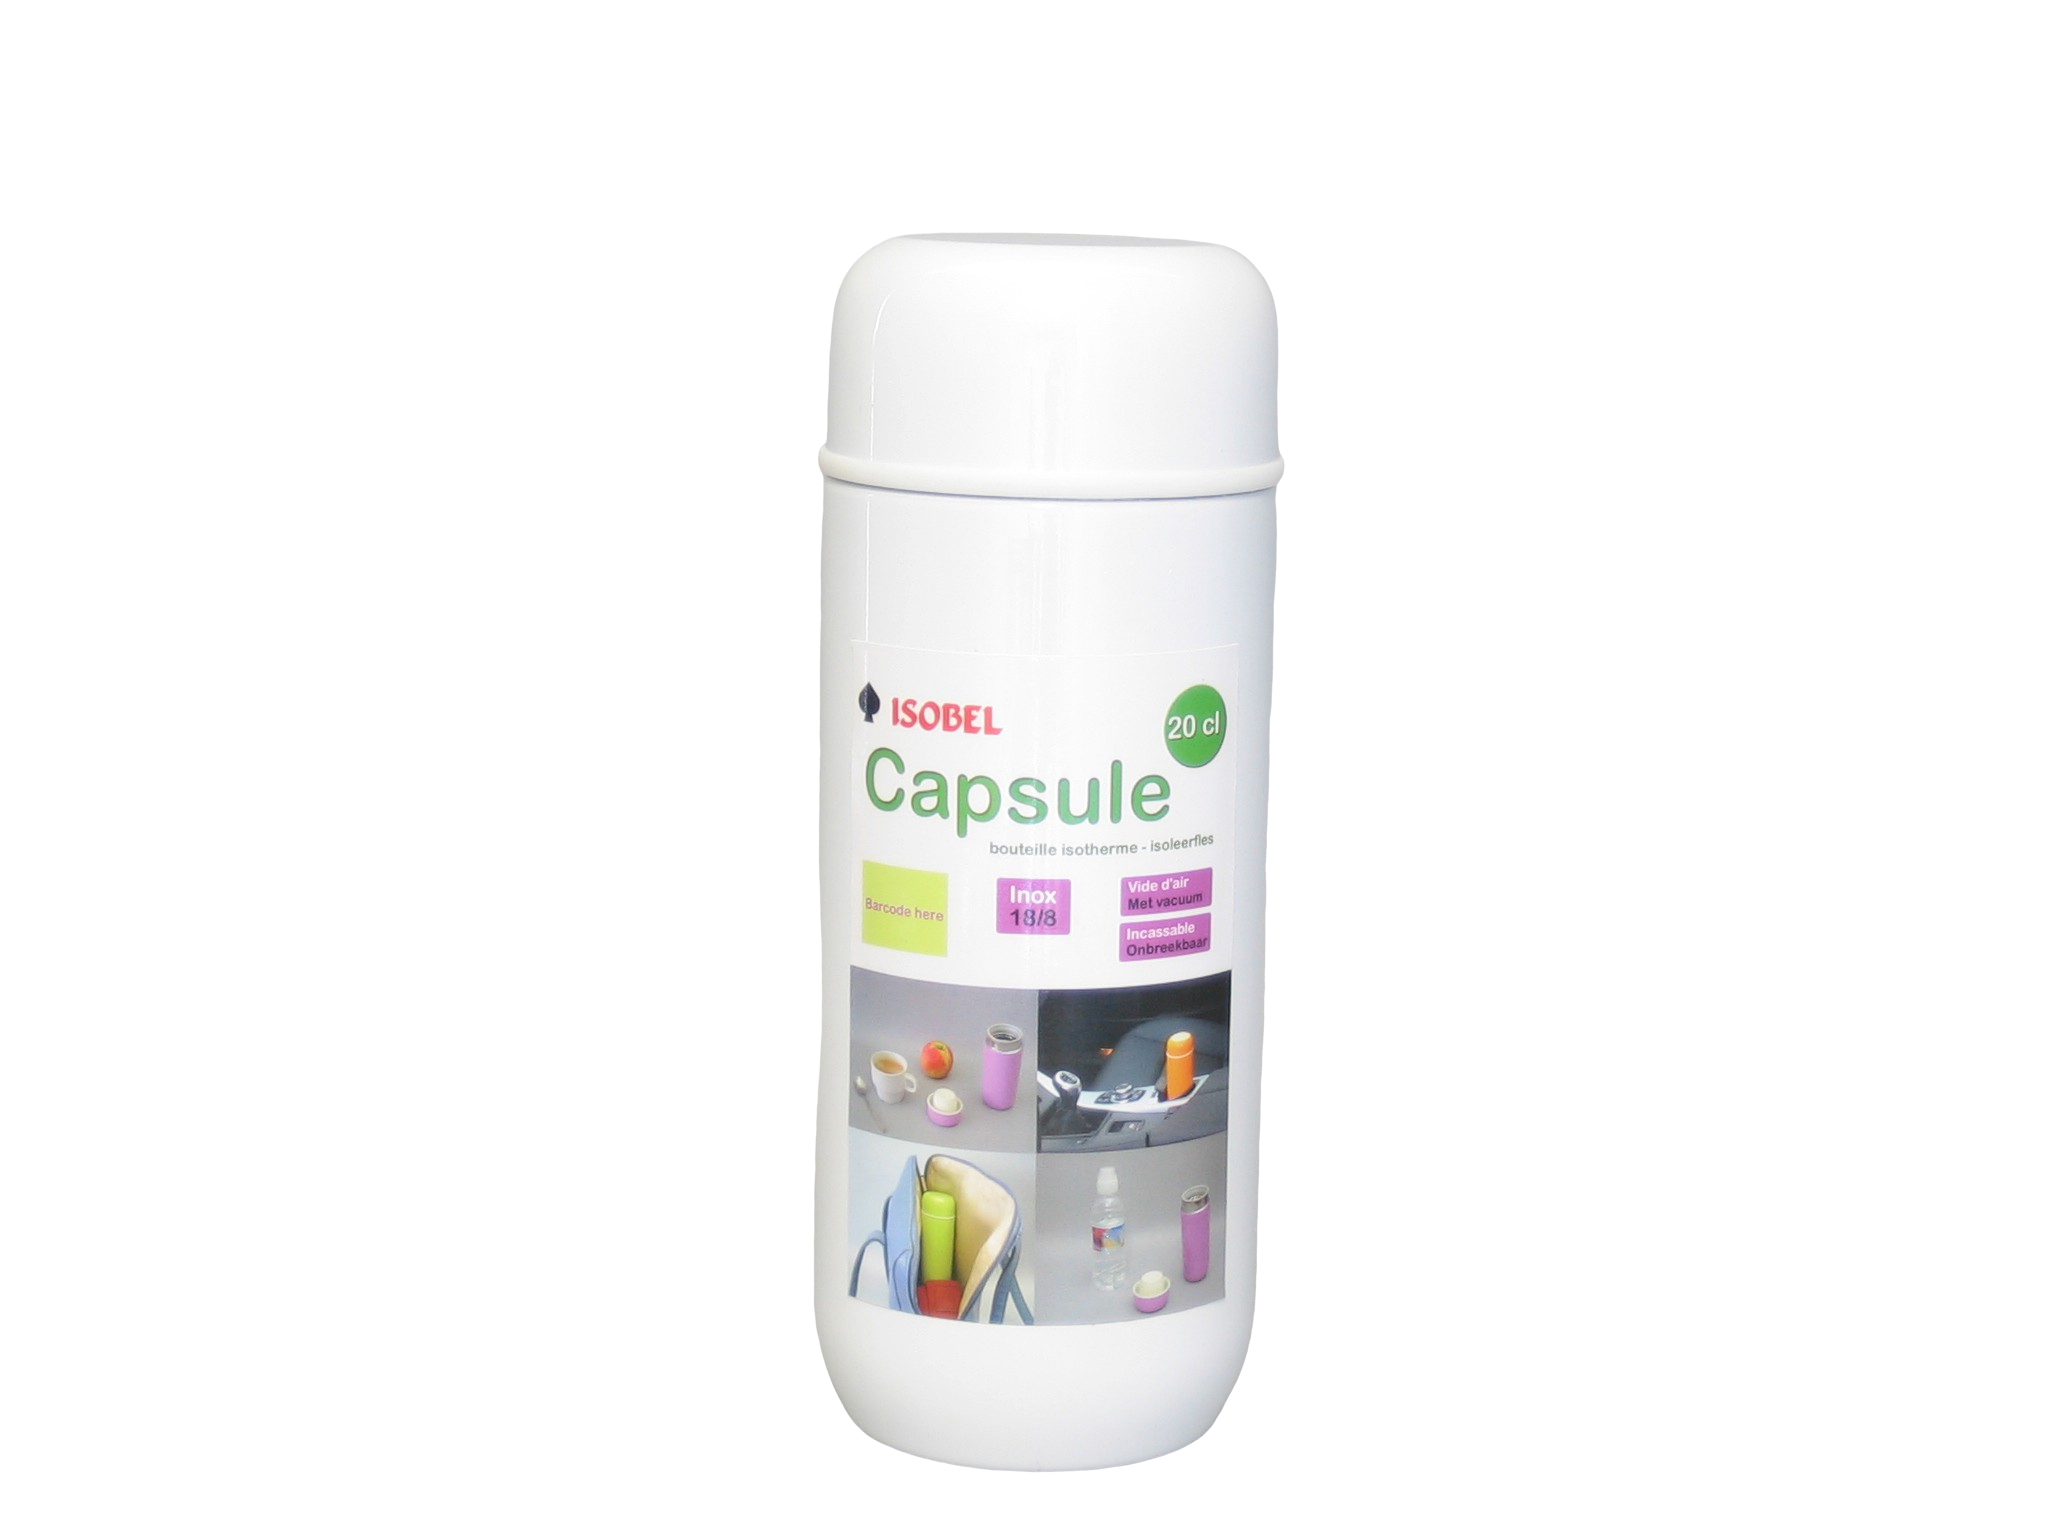 CAPSULE-001 - Bouteille isotherme inox incassable blanc 0.20 L - Isobel